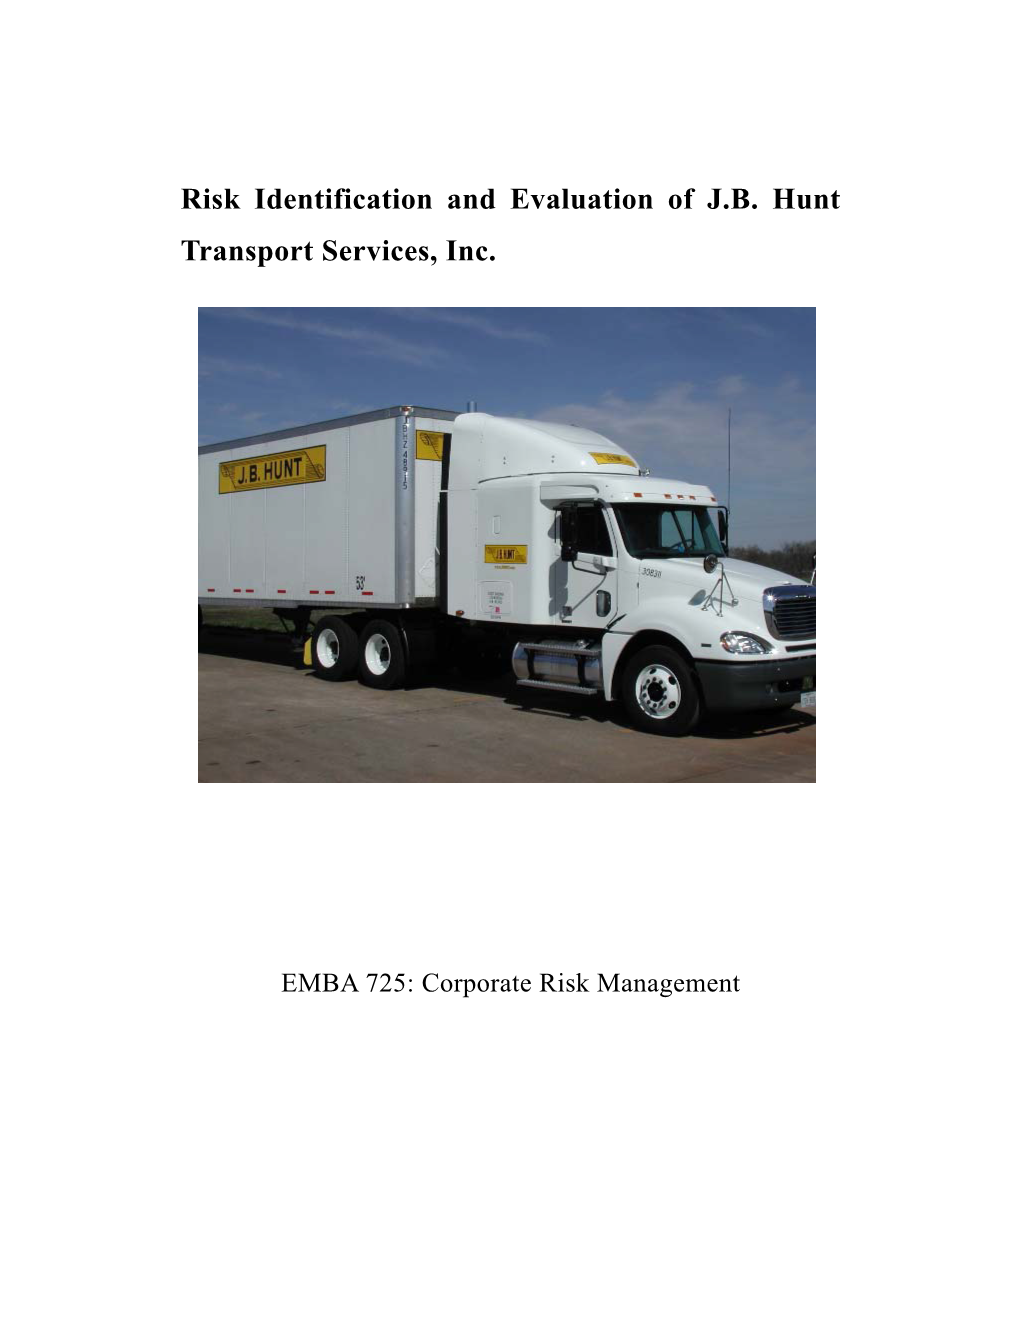 Risk Identification and Evaluation of J.B. Hunt Transport Services, Inc